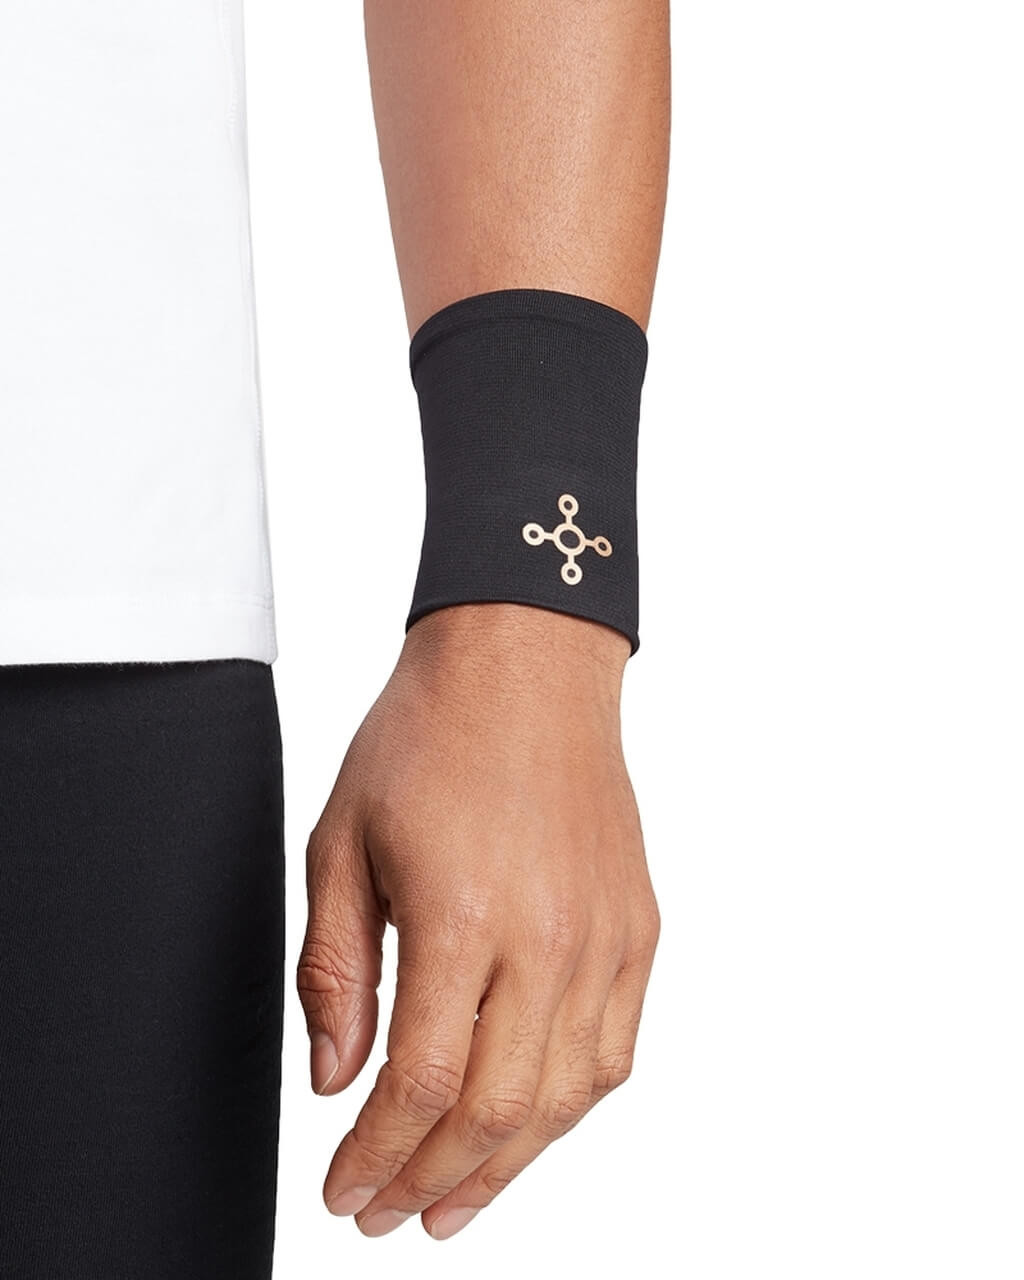 Copper Wrist Compression Sleeve - Lightweight Breathable Wrist Support for  Carpal Tunnel, Arthritis, Tendonitis, Bursitis and Wrist Sprain - Wrist  Brace for Men & Women 